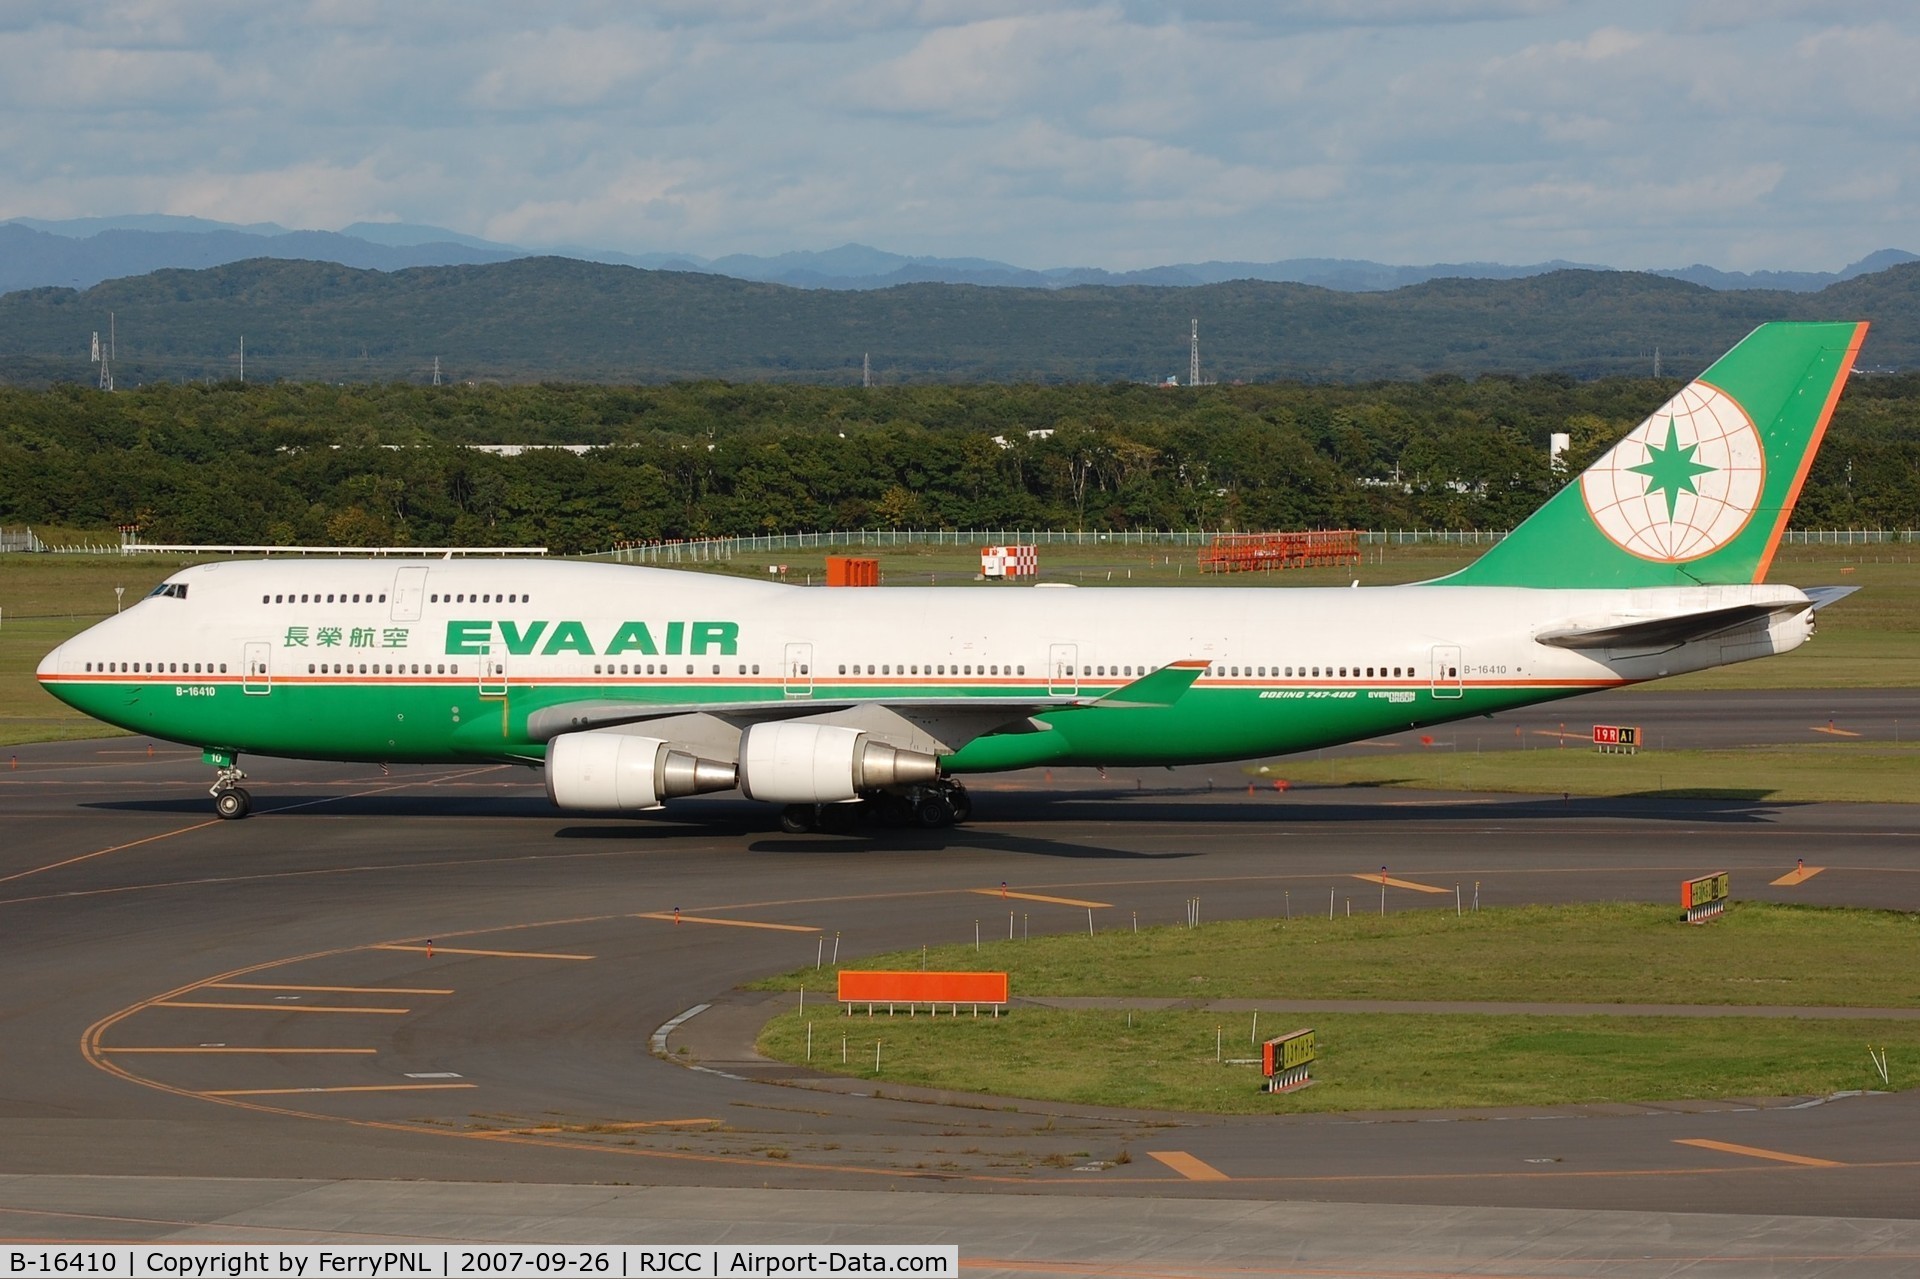 B-16410, 1997 Boeing 747-45E C/N 29061, EVA B744 arriving in CTS